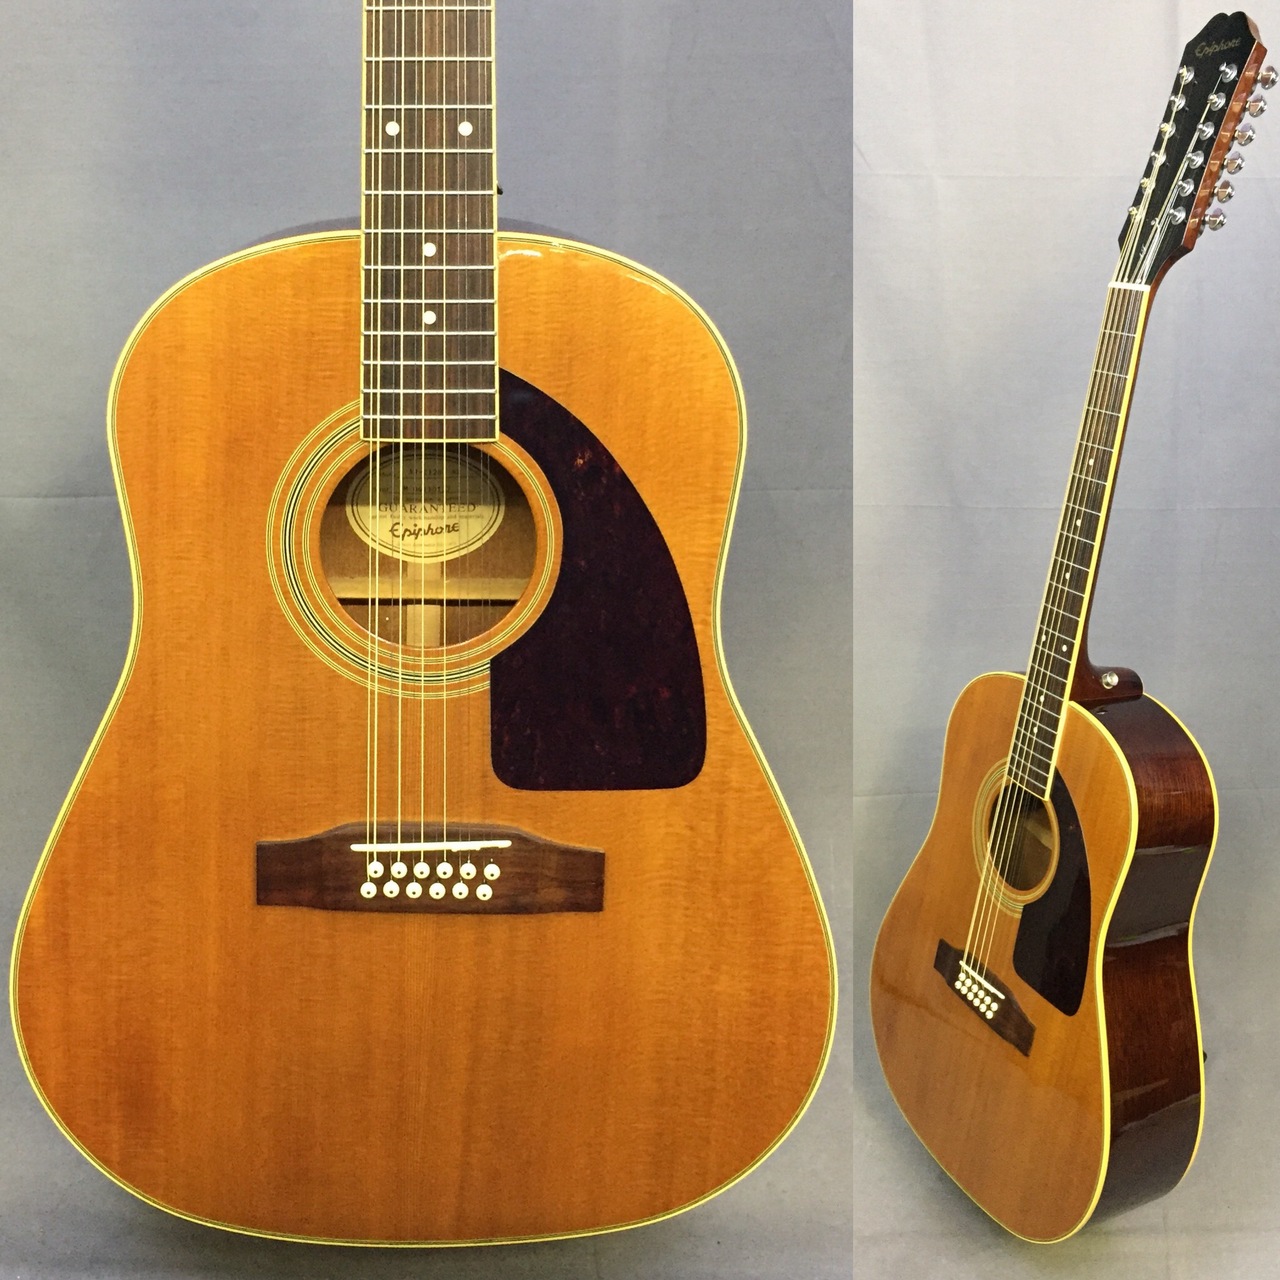 Epiphone AJ-212S 12弦ギター 2004年製 買取ました。デジマートにて ...